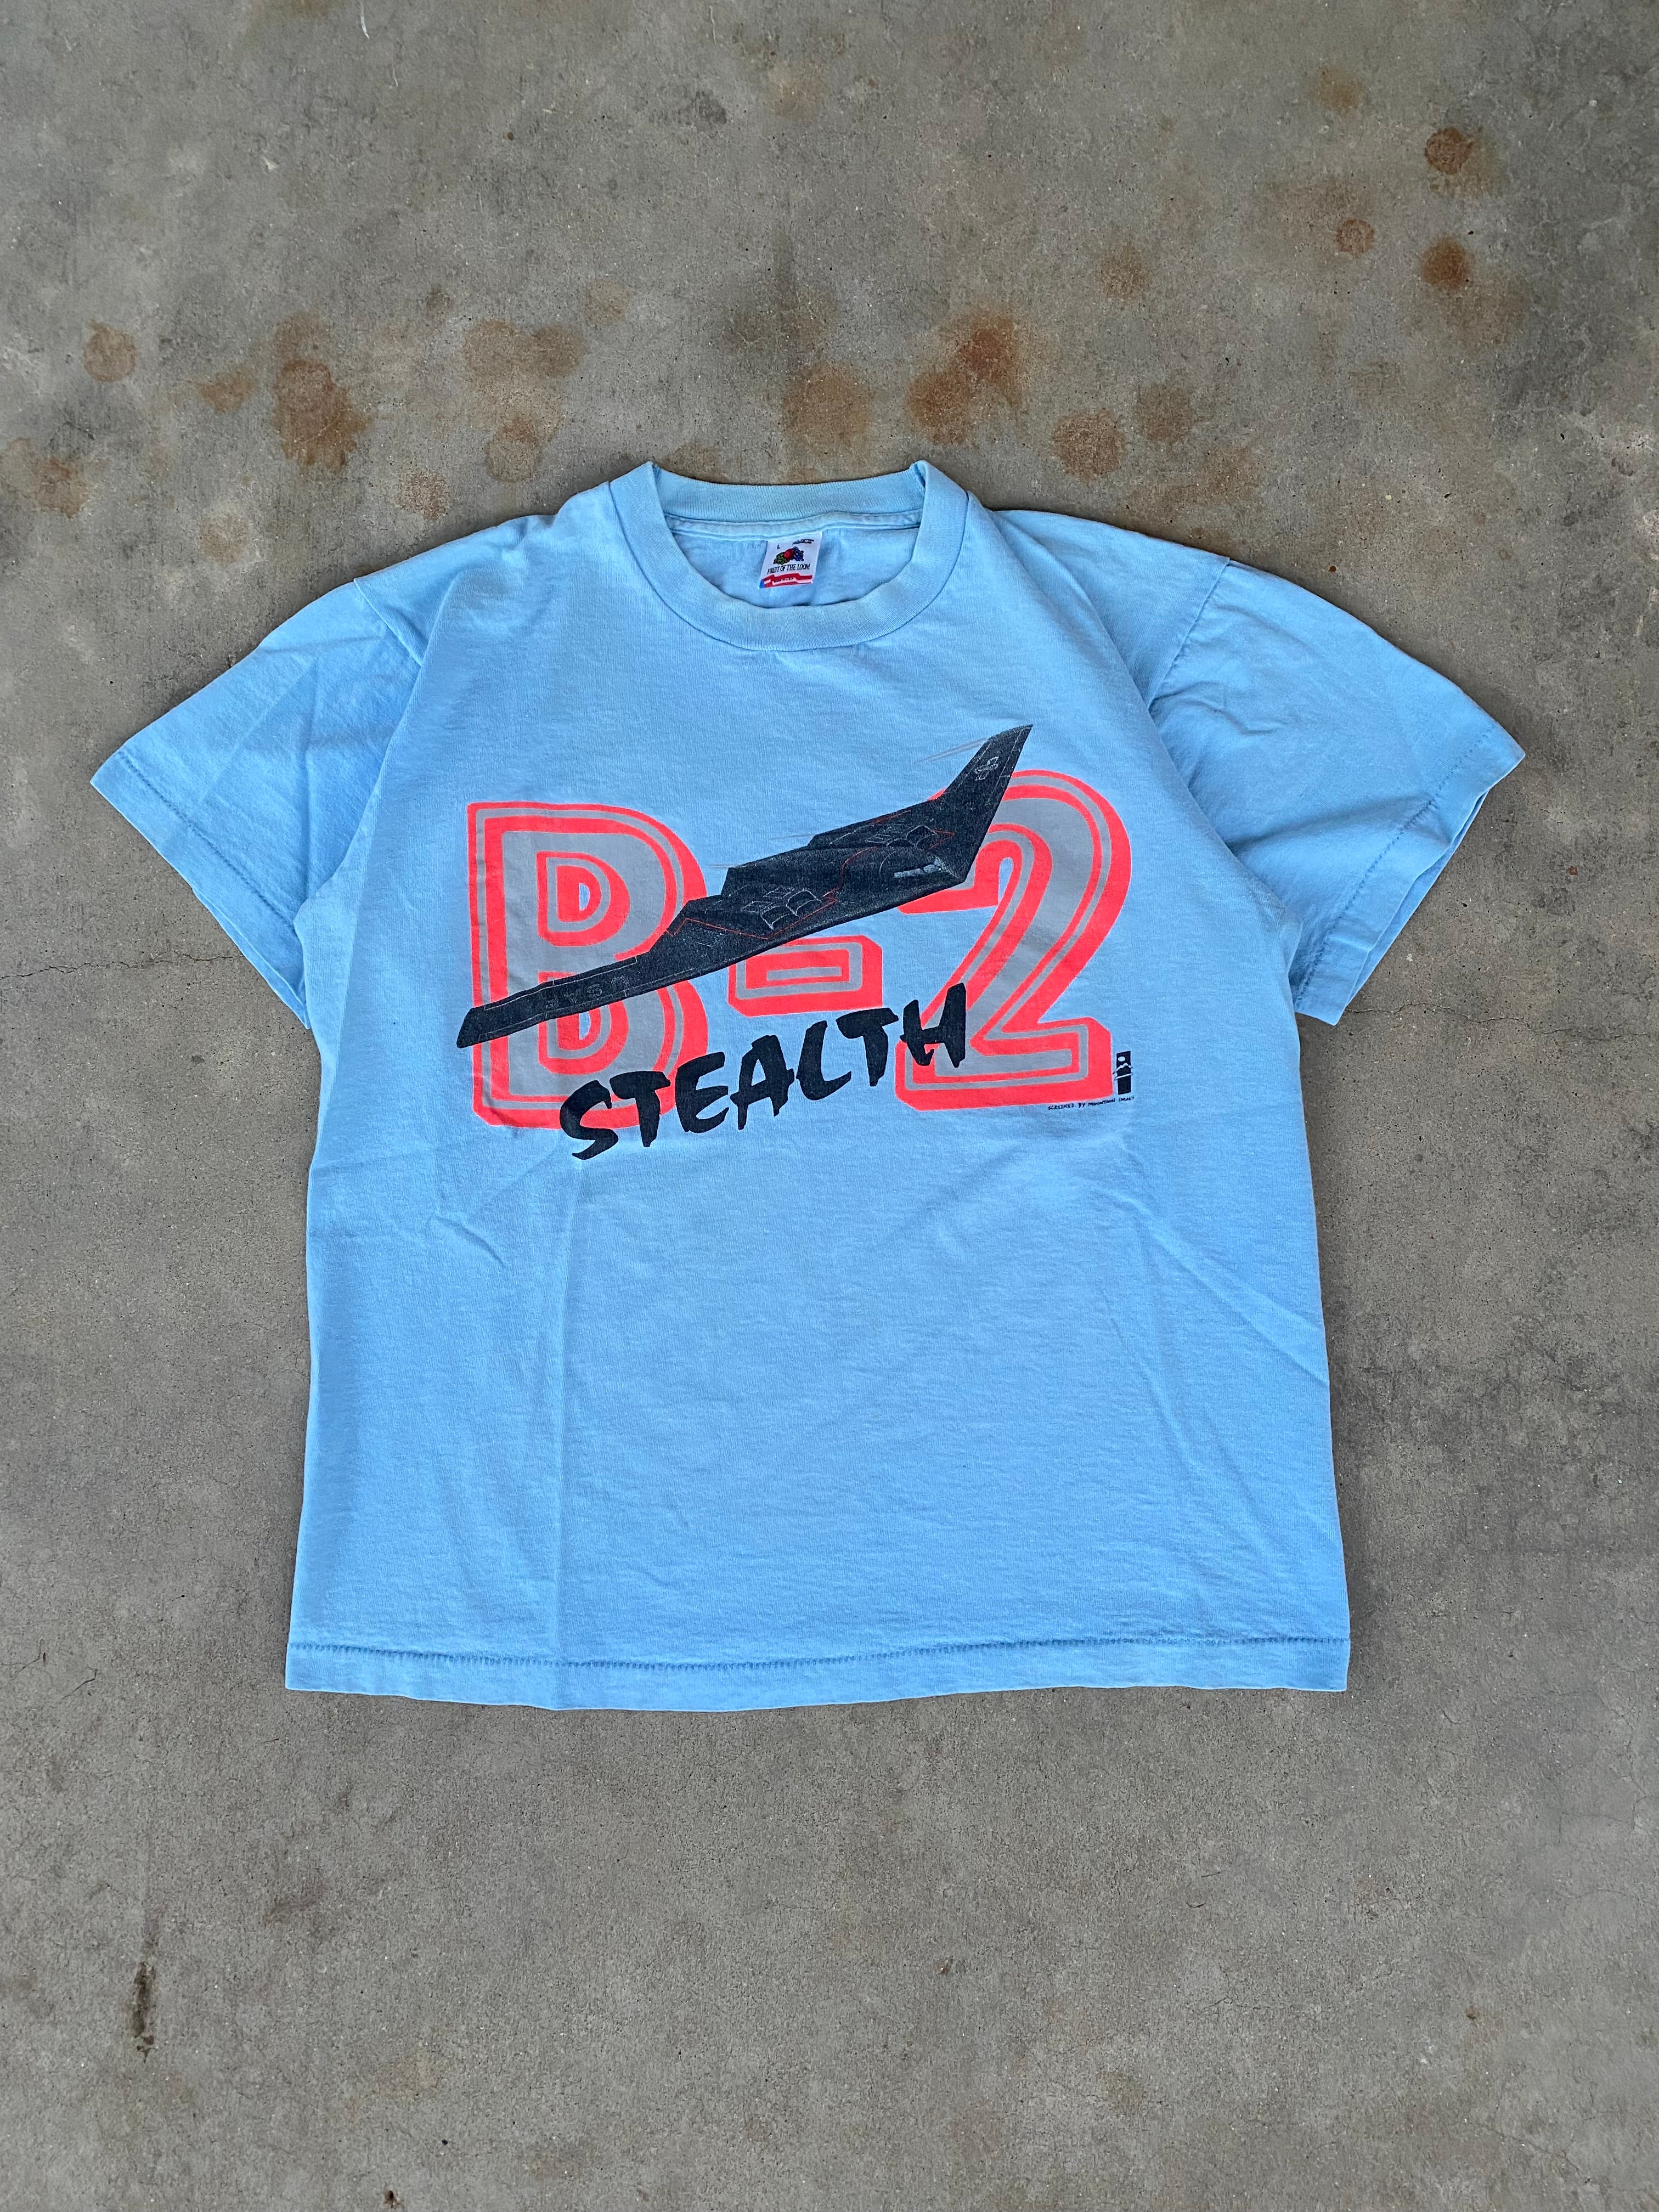 1990s B-2 Stealth Bomber T-Shirt (M/L)